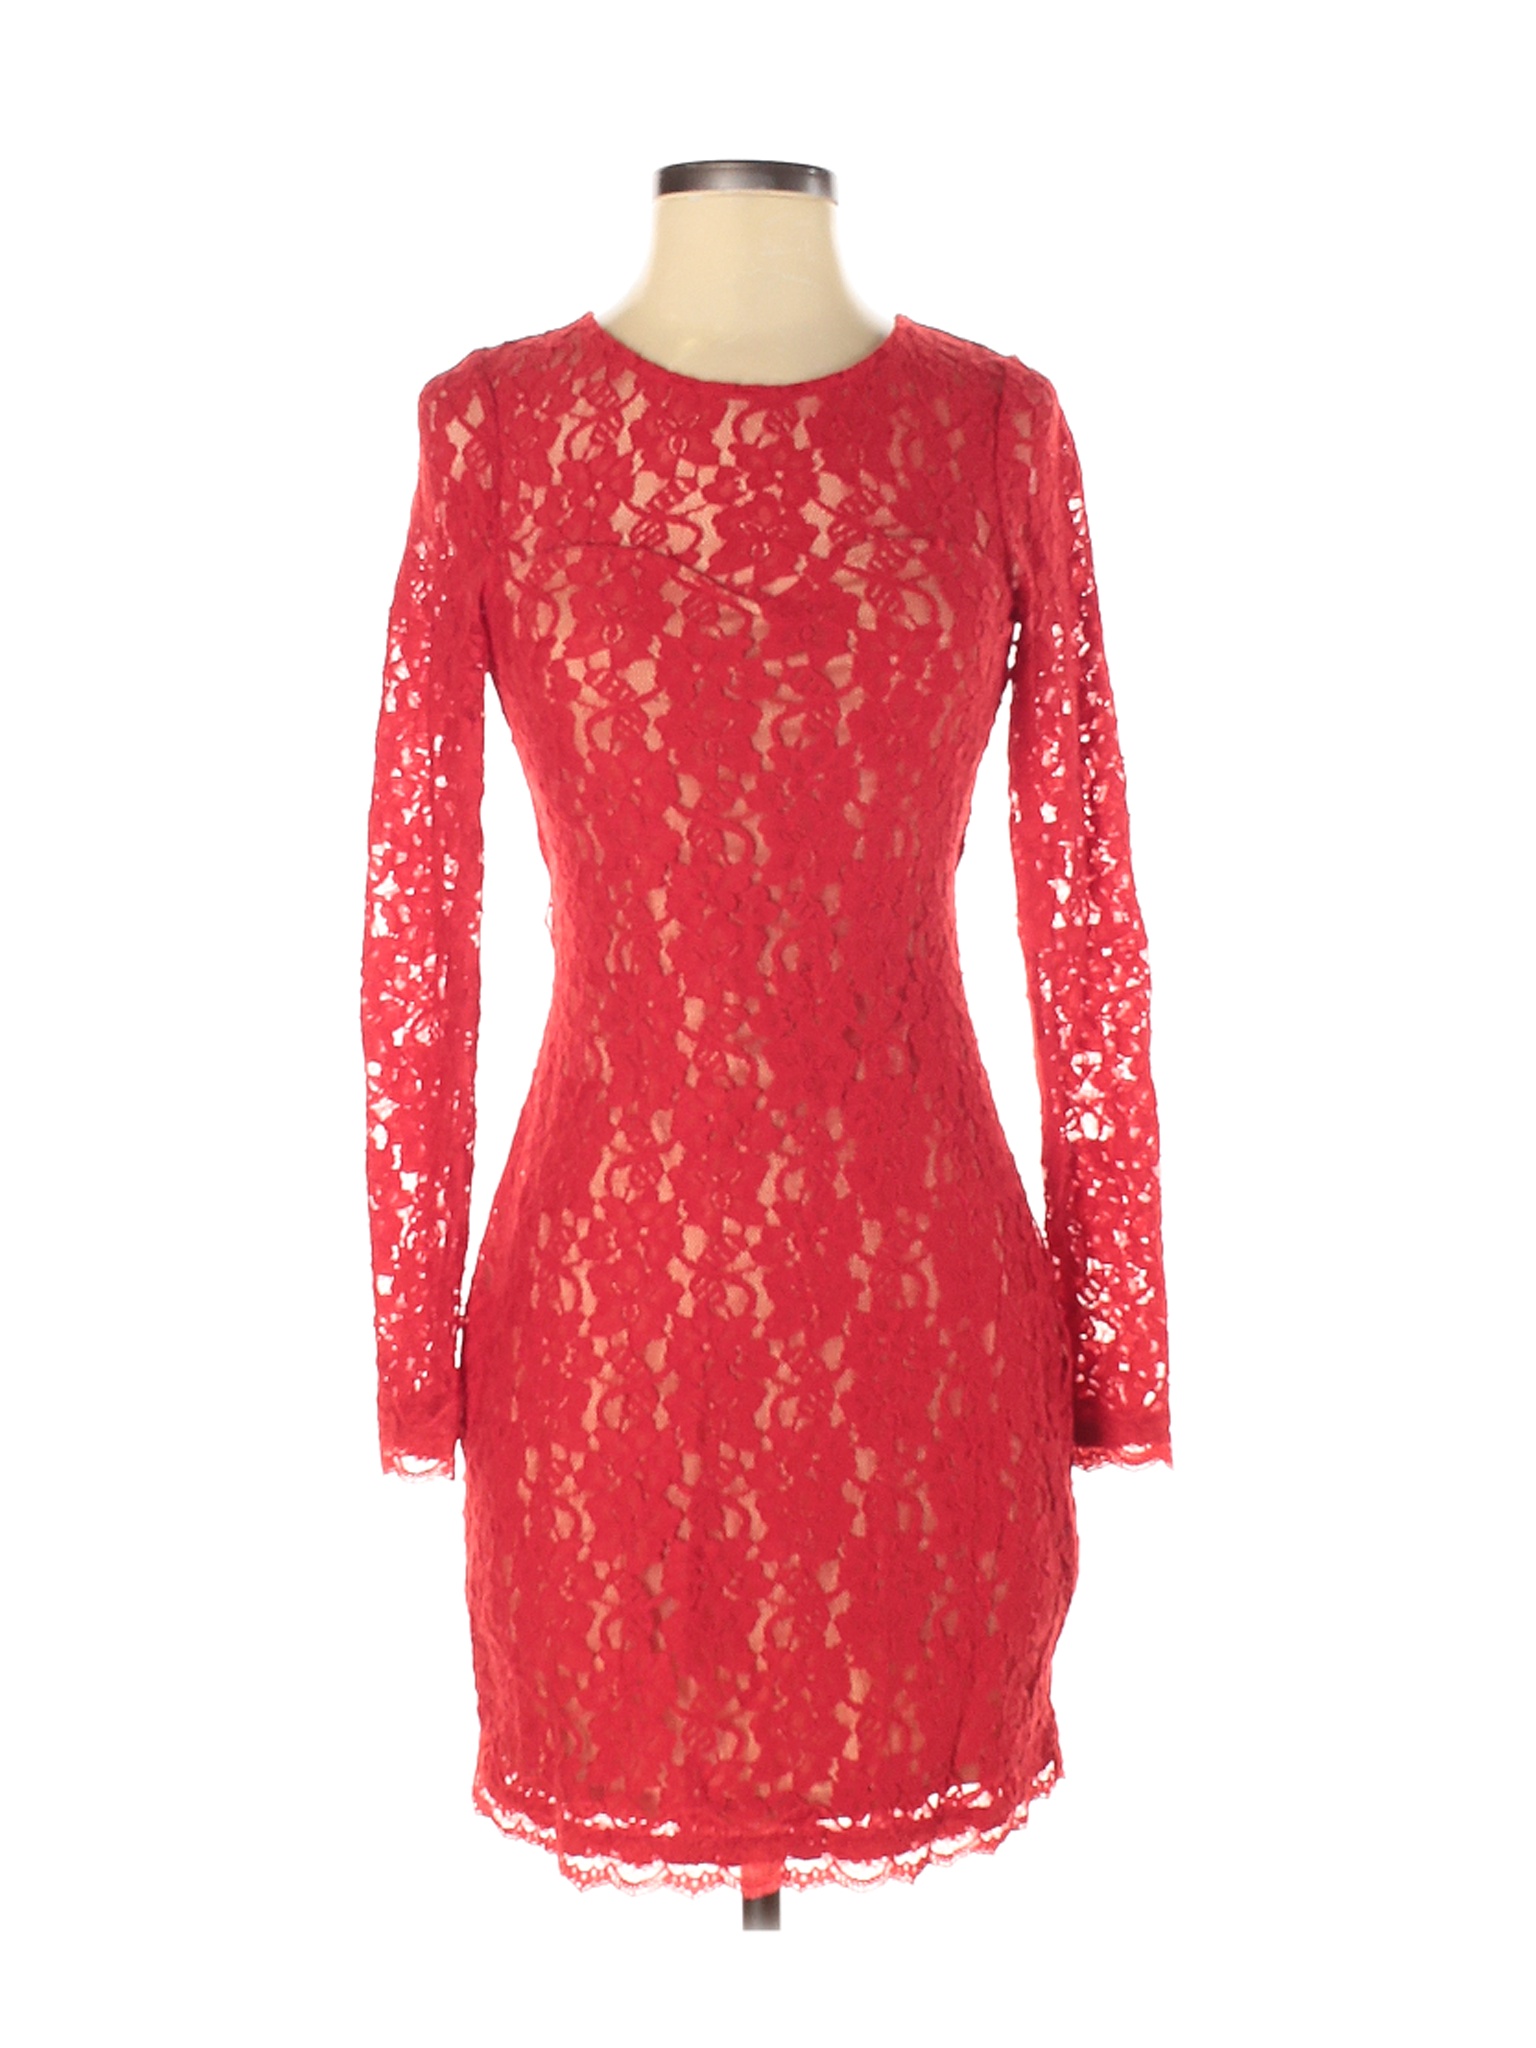 Express Women Red Cocktail Dress XS | eBay